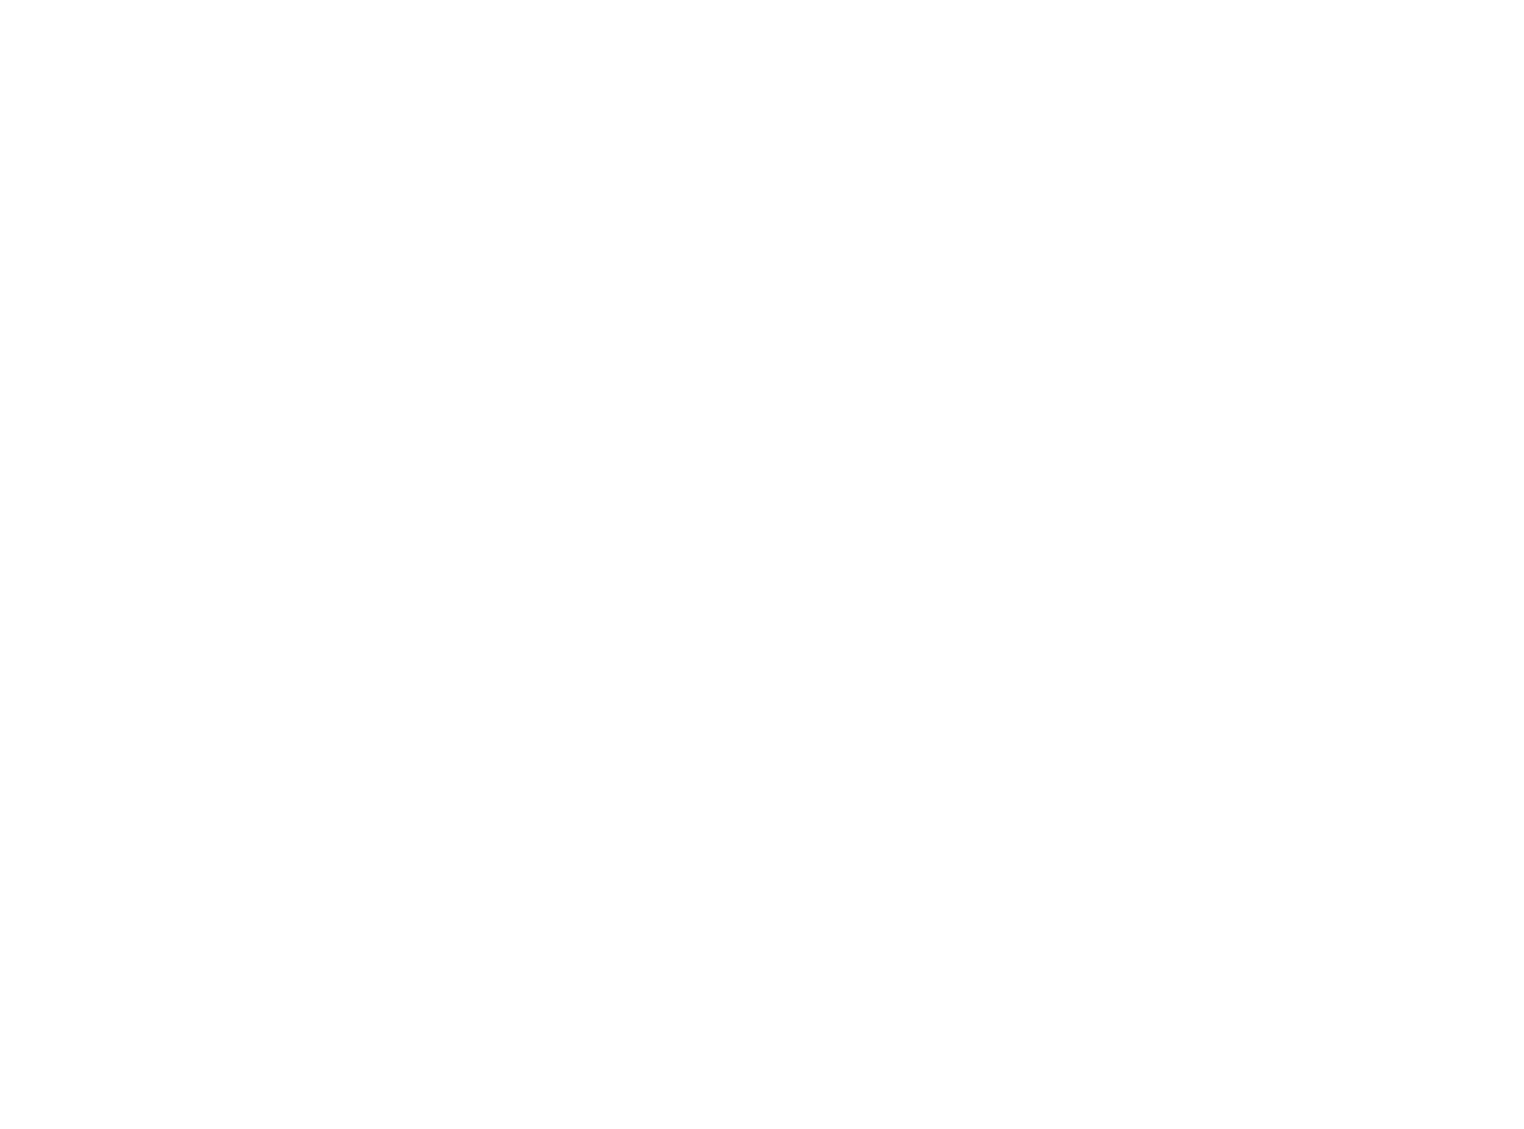 Sopra Steria Group logo for dark backgrounds (transparent PNG)